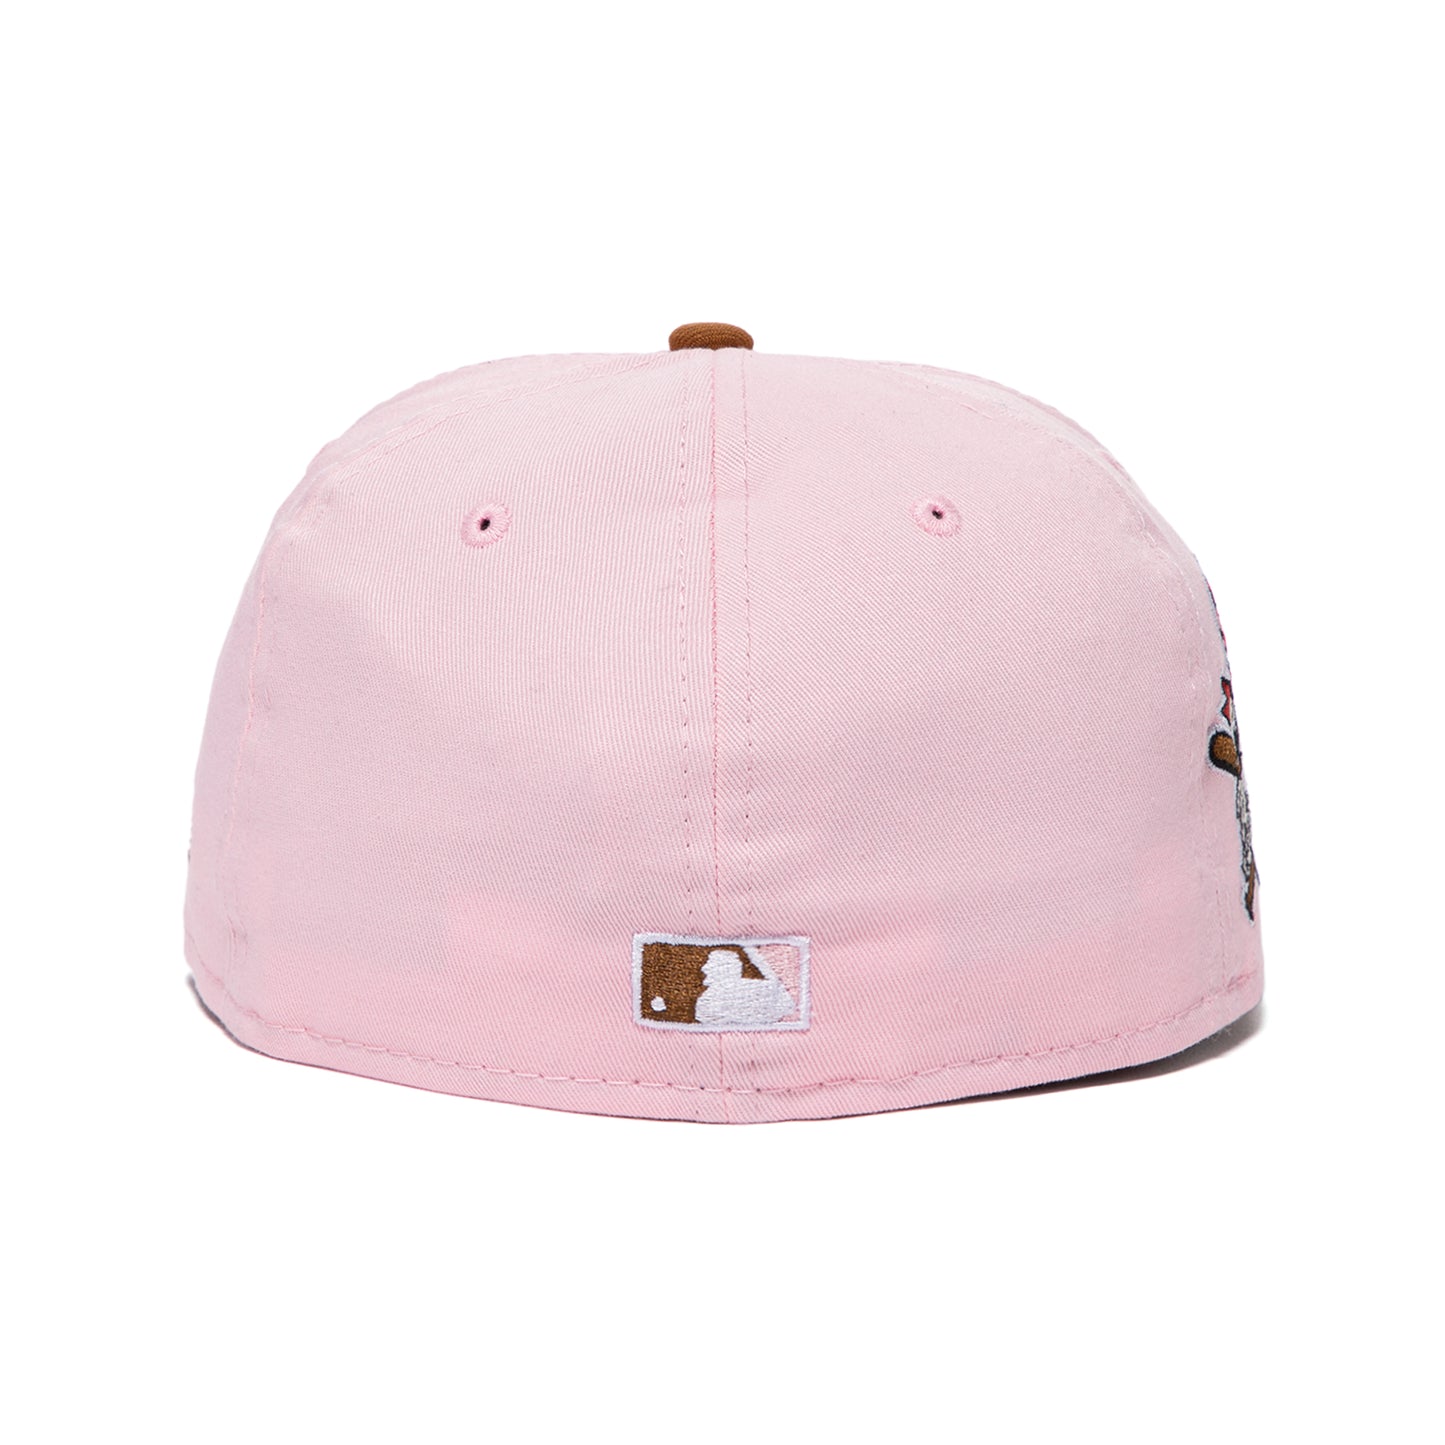 Concepts x New Era 5950 Atlanta Braves Fitted Hat (Pink/Irish Coffee)